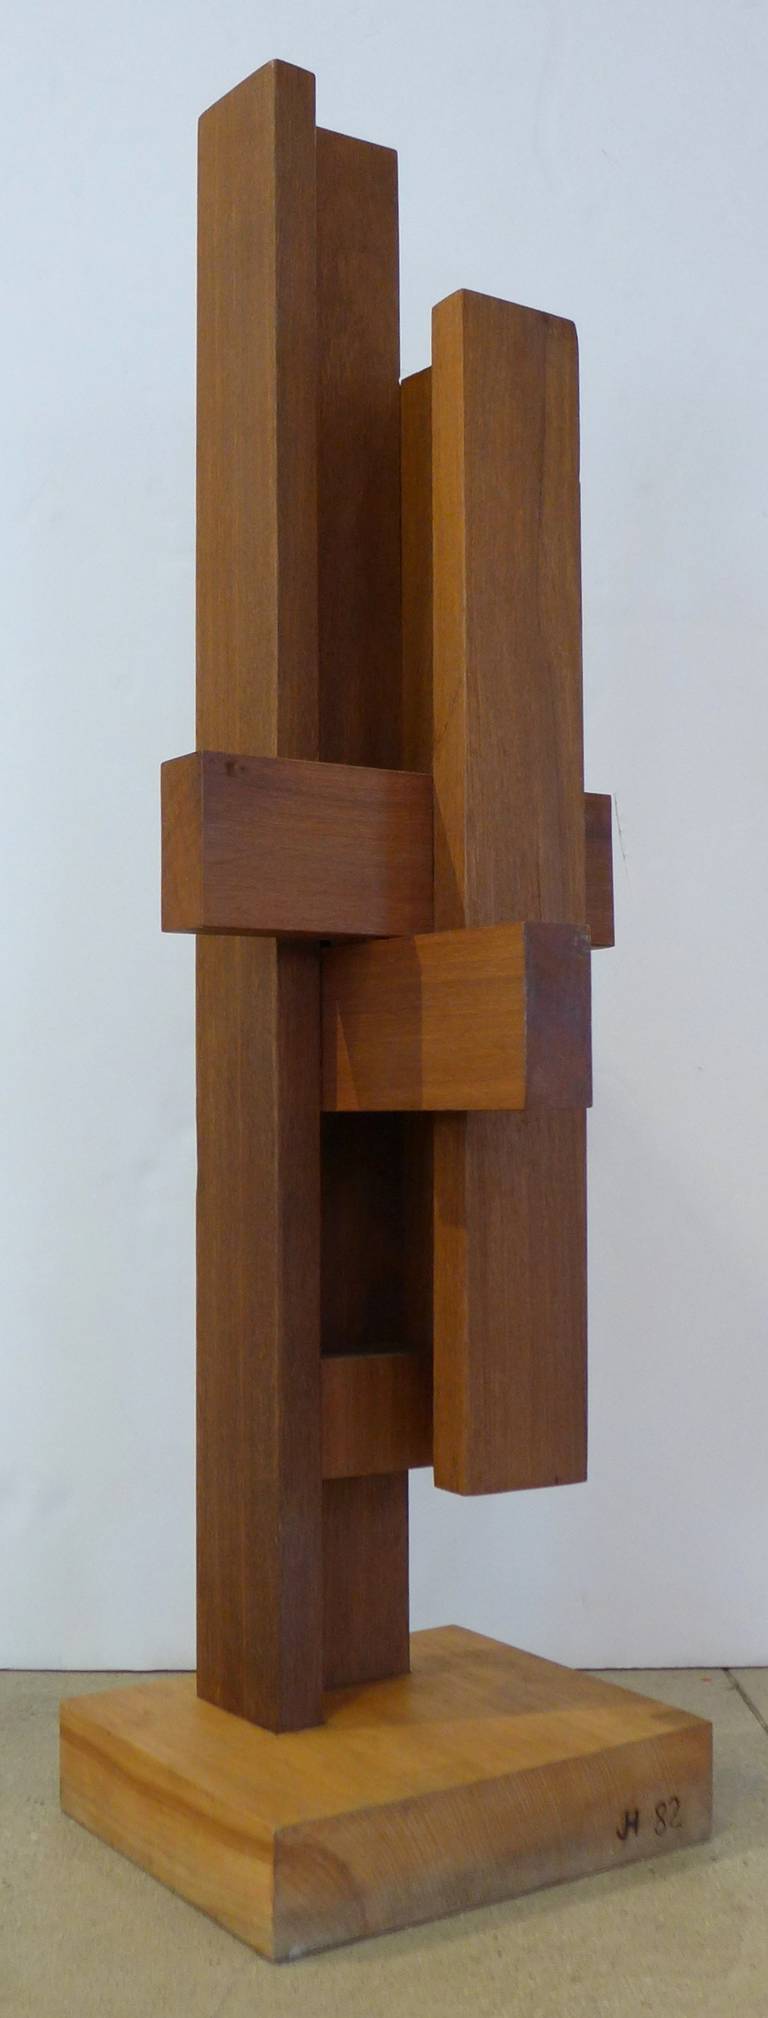 De Stijl Constructivist Sculpture by Johannes Hoog